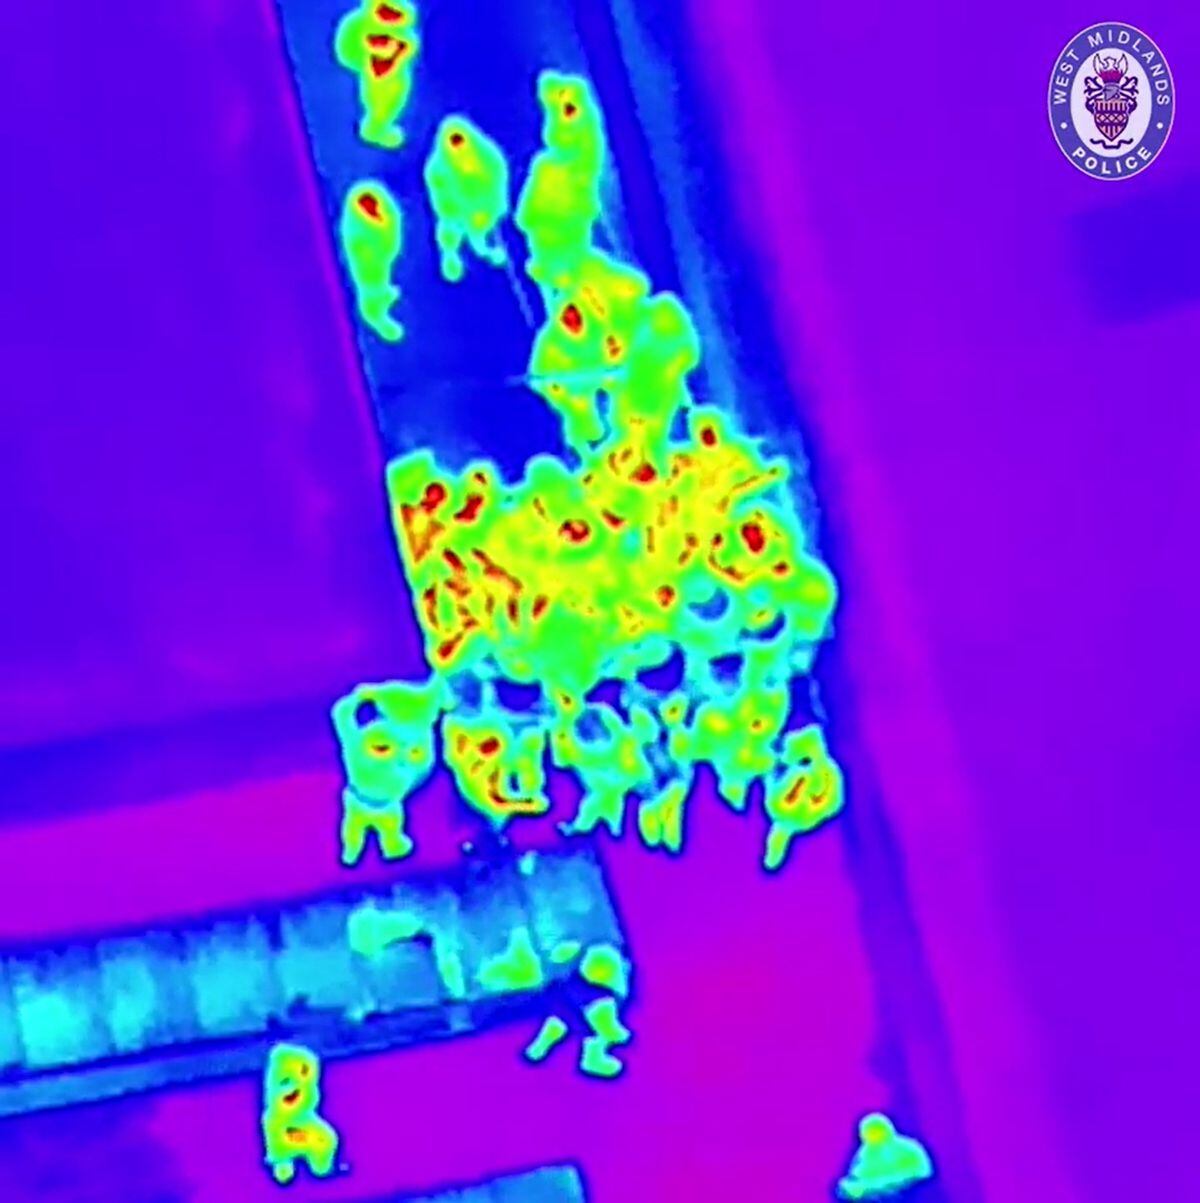 Thermal imaging shows revellers fleeing an illegal nightclub in Birmingham via the roof